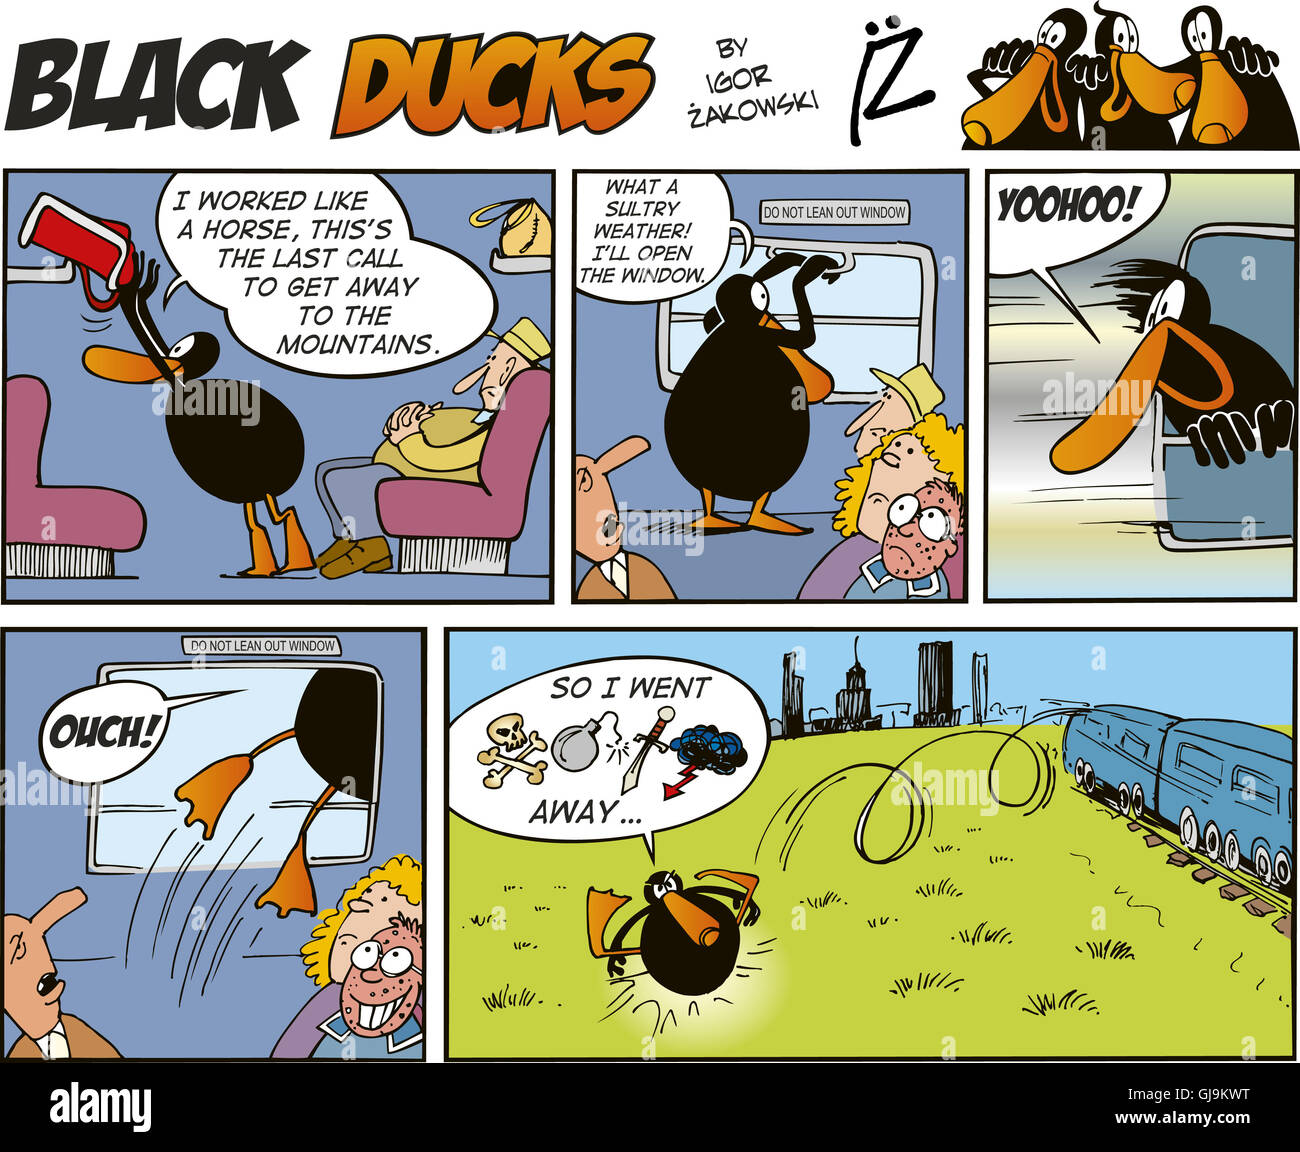 Black Ducks Comics episode 30 Stock Photo